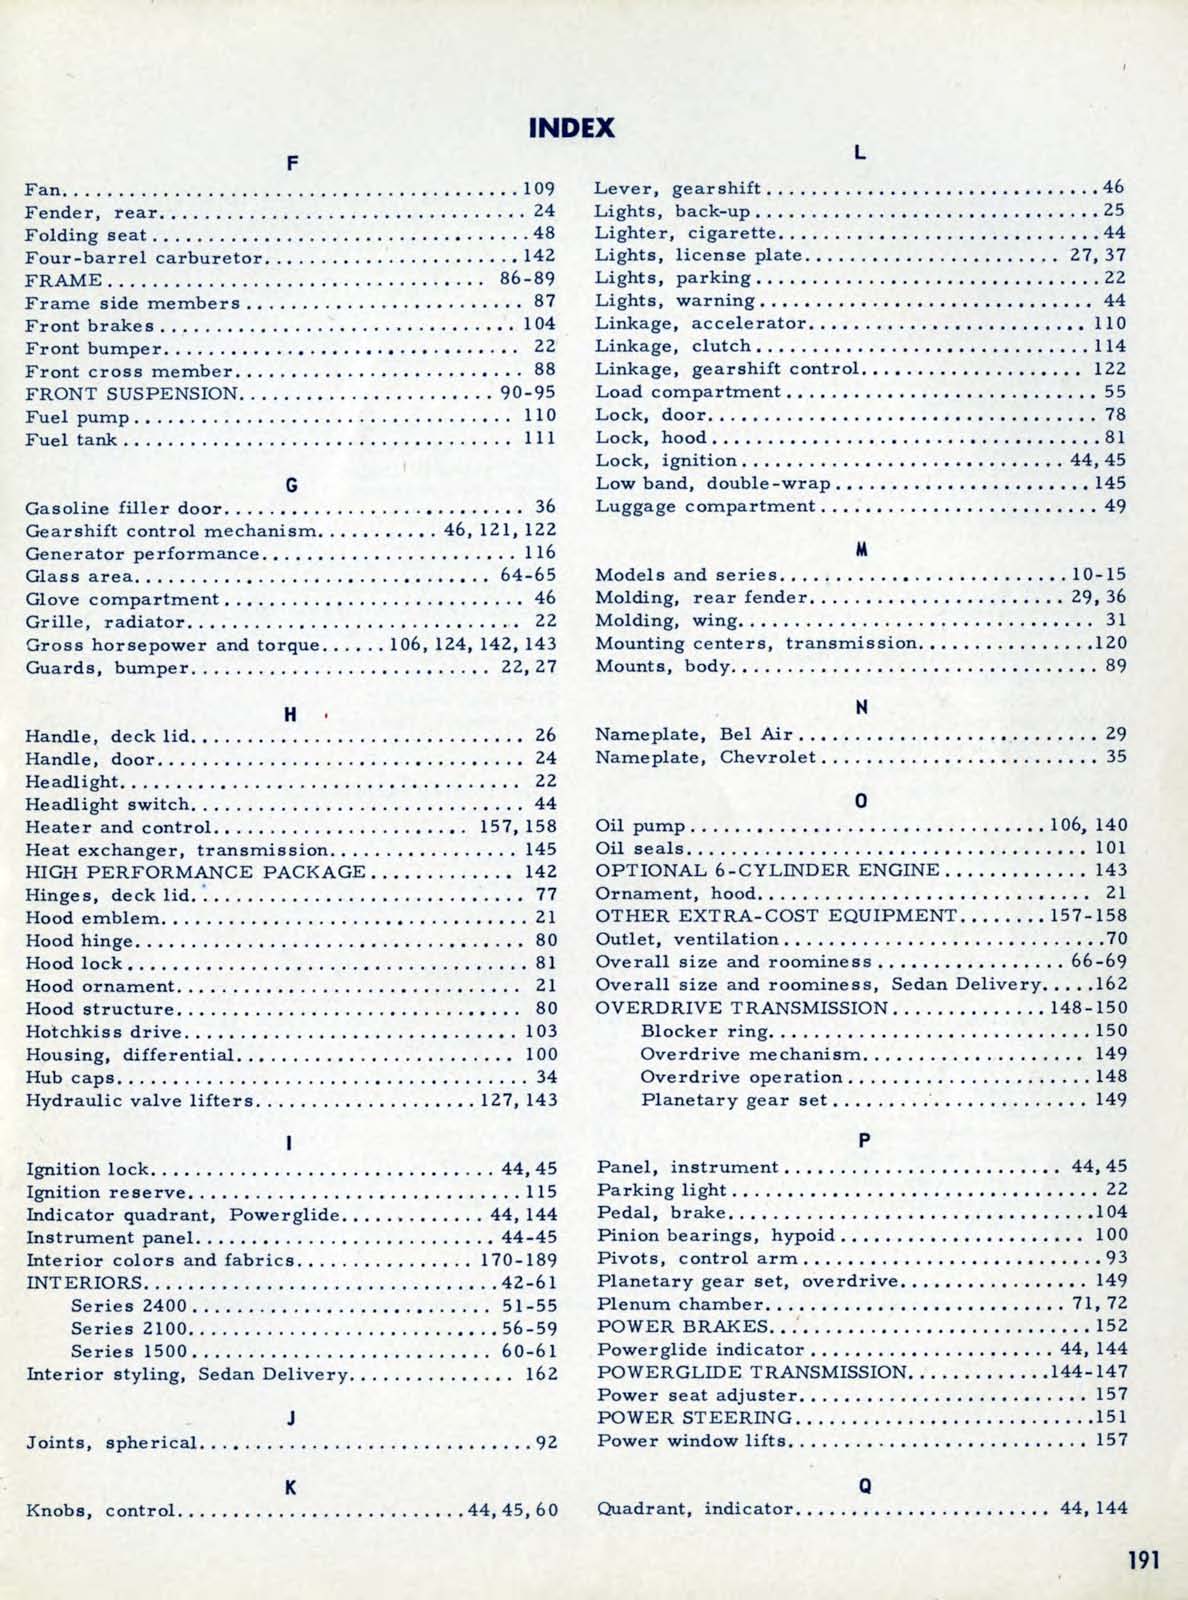 1955_Chevrolet_Engineering_Features-191